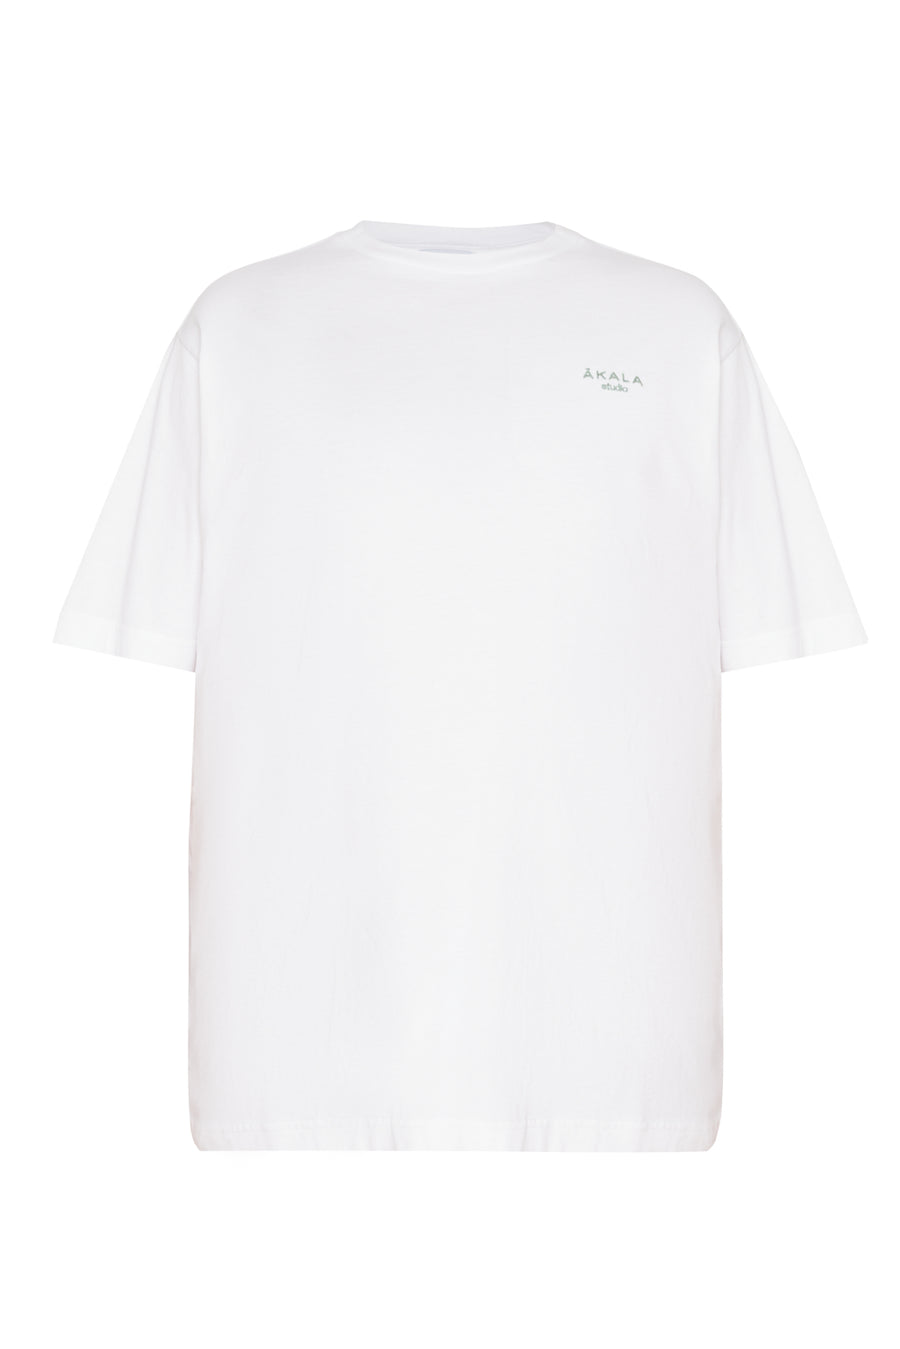 Oversized white T-shirt